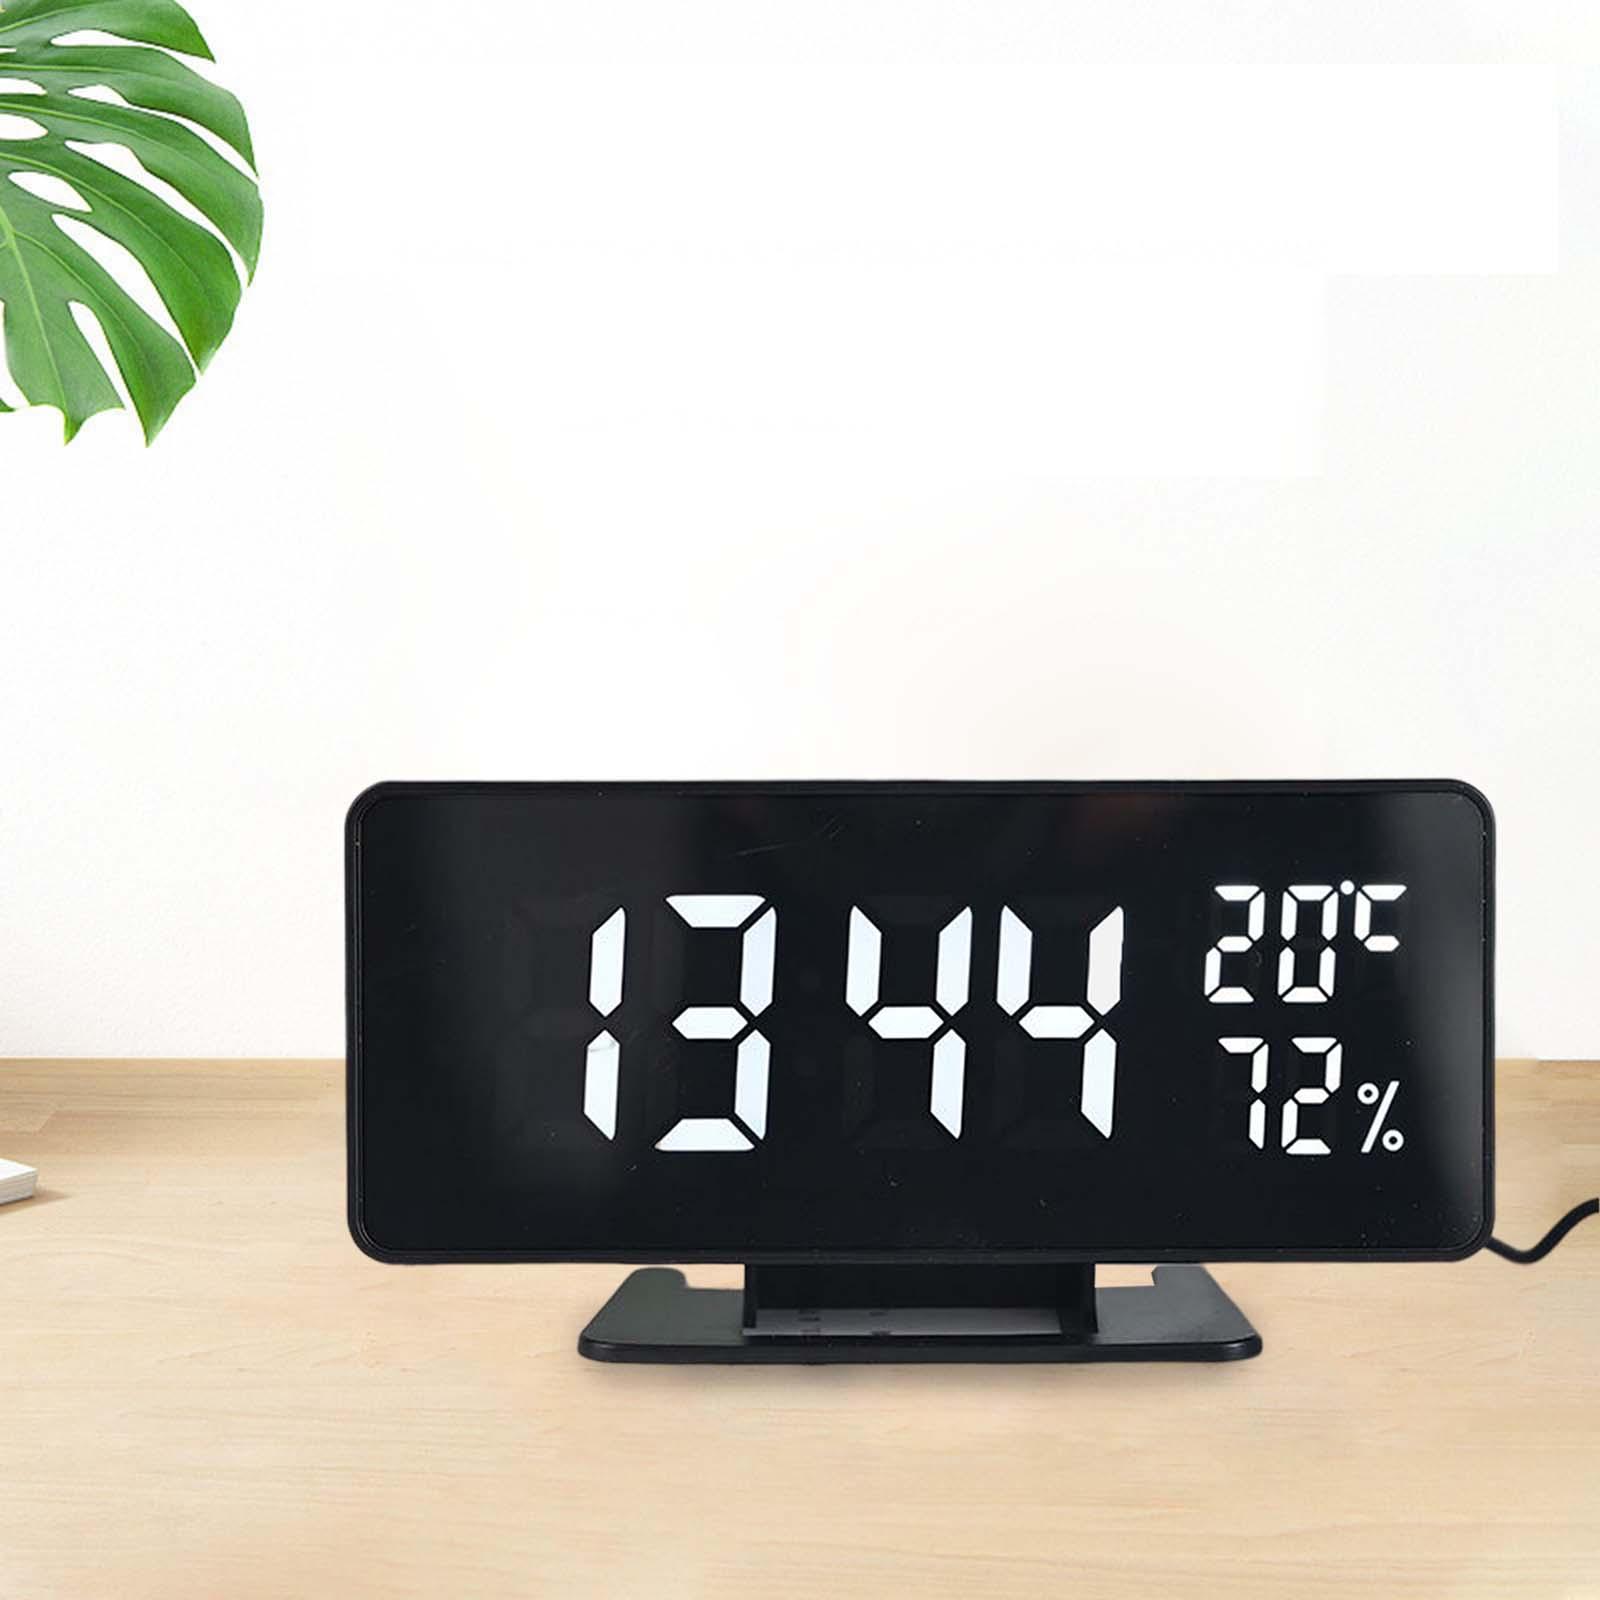 USB Digital Alarm Clock Date Display Bedroom Home Decor Decorative LED White